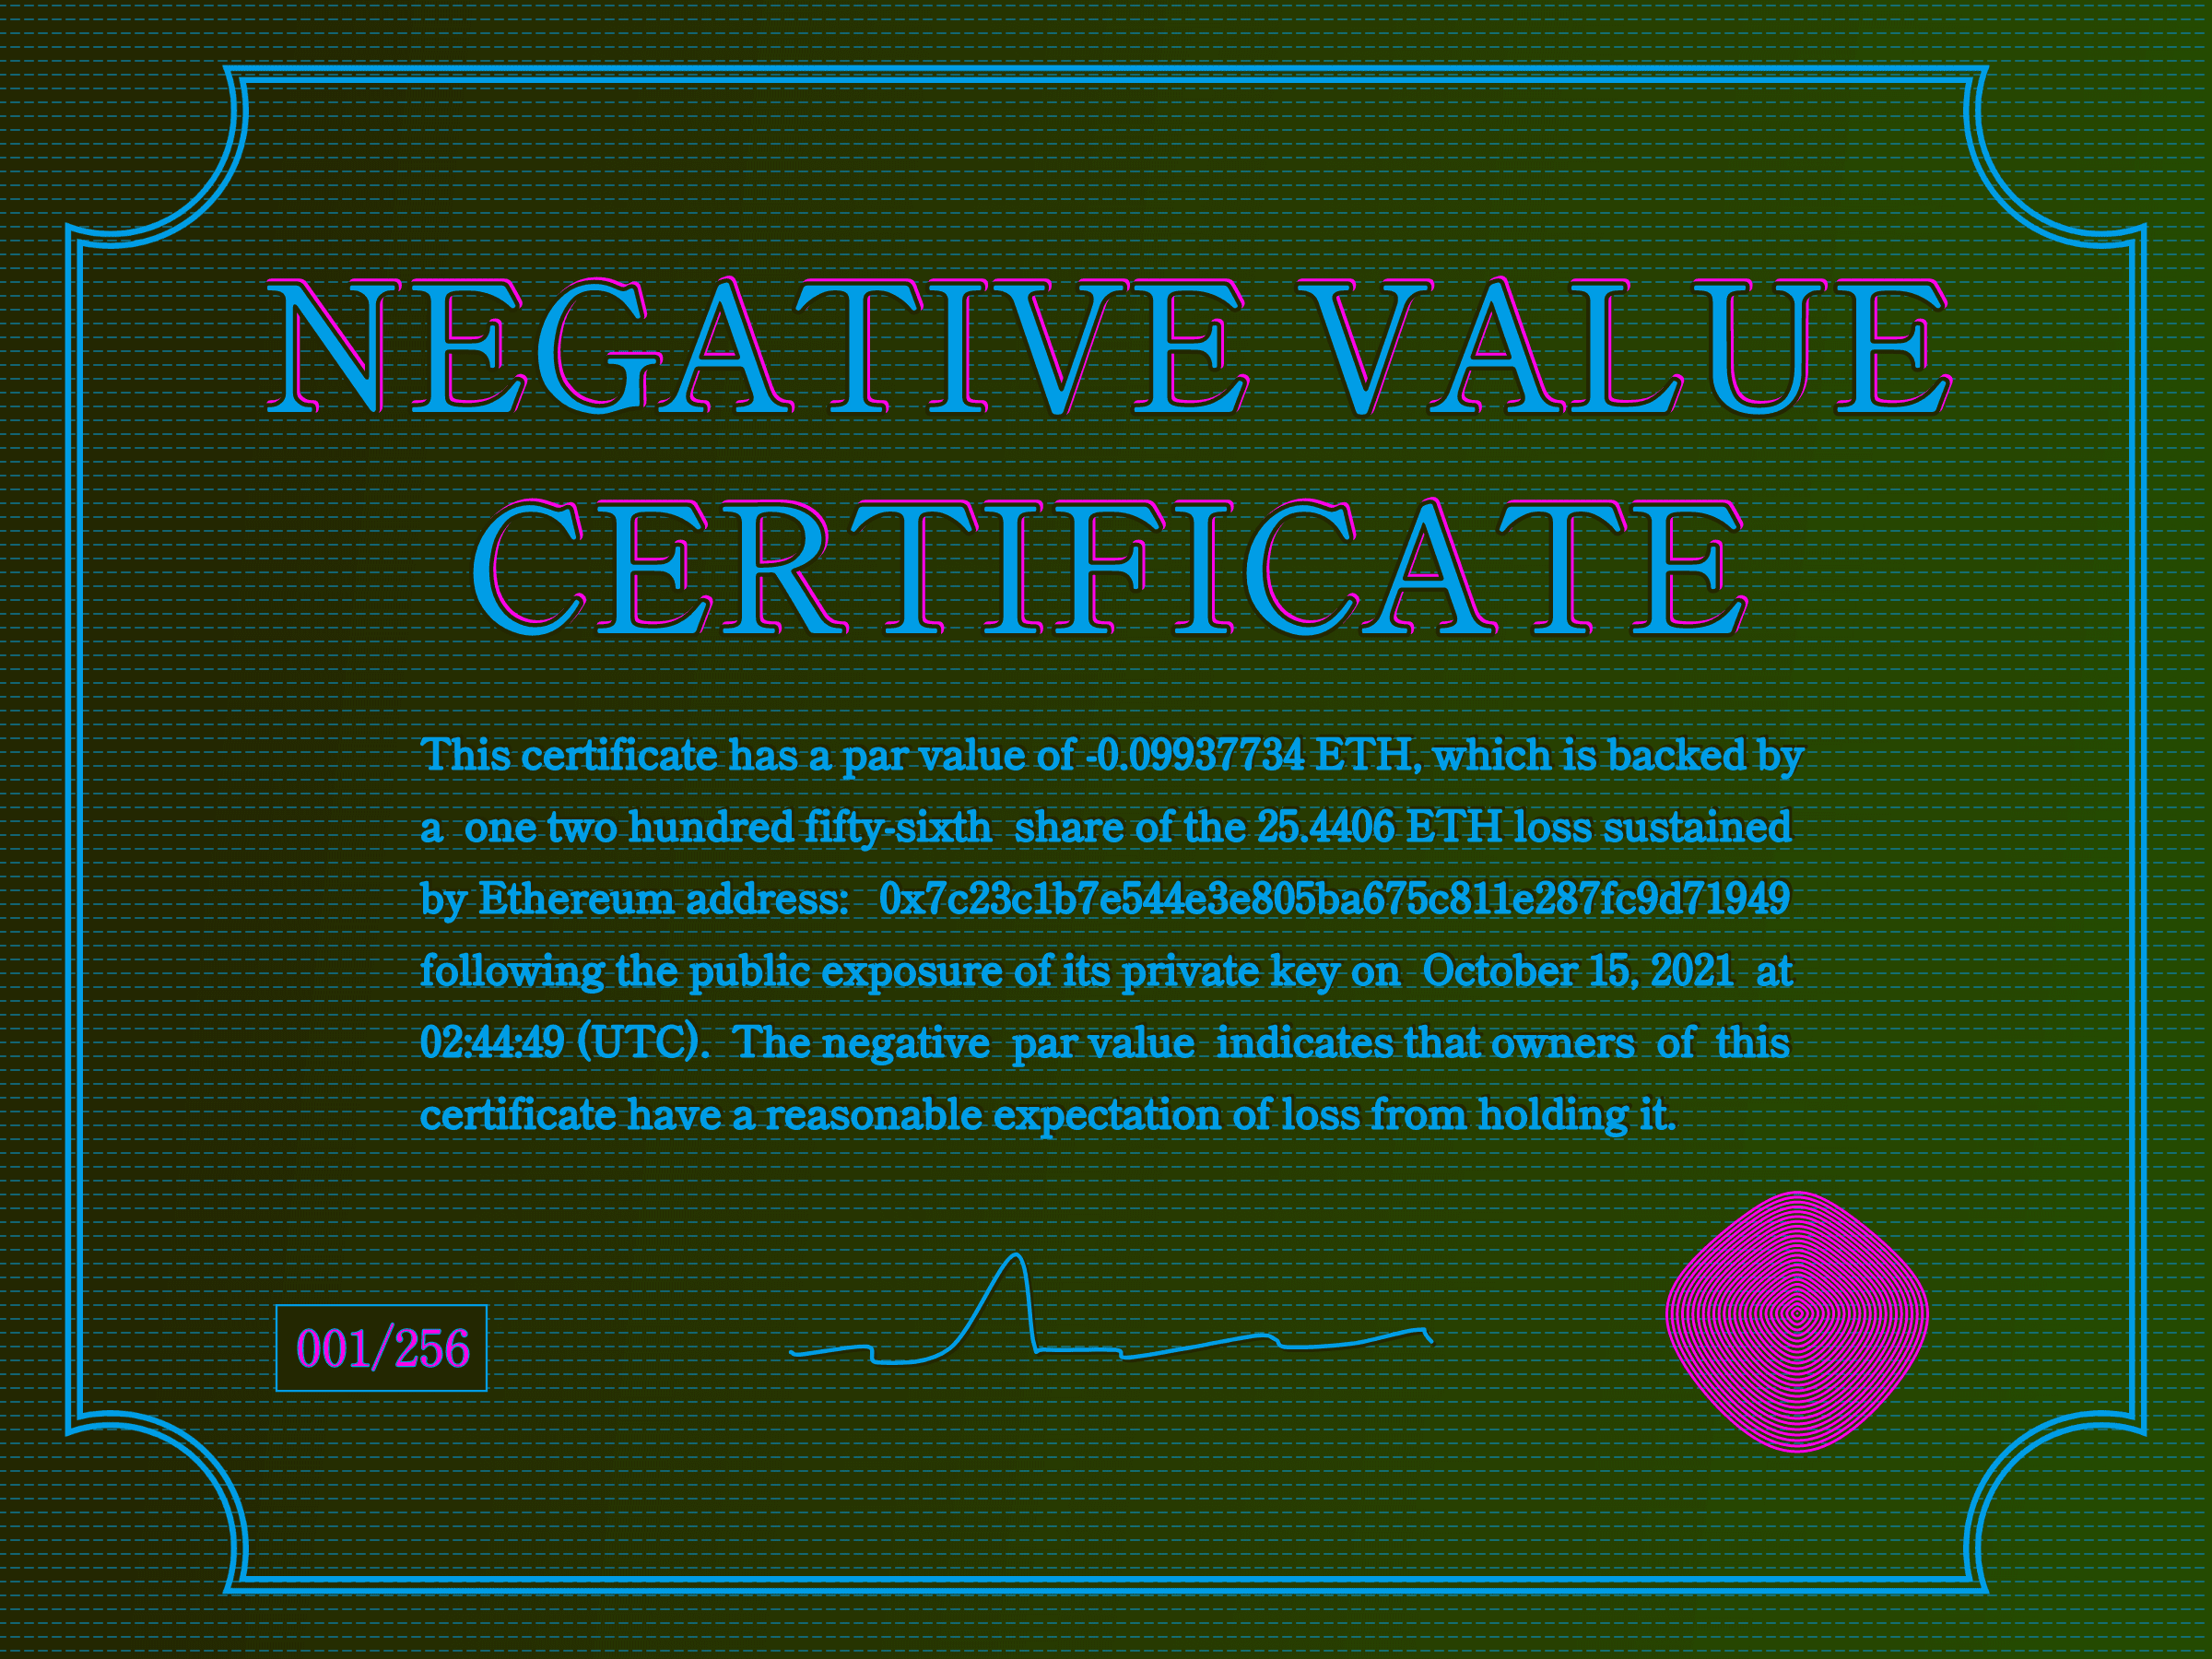 Negative Value Certificate #1 of 256